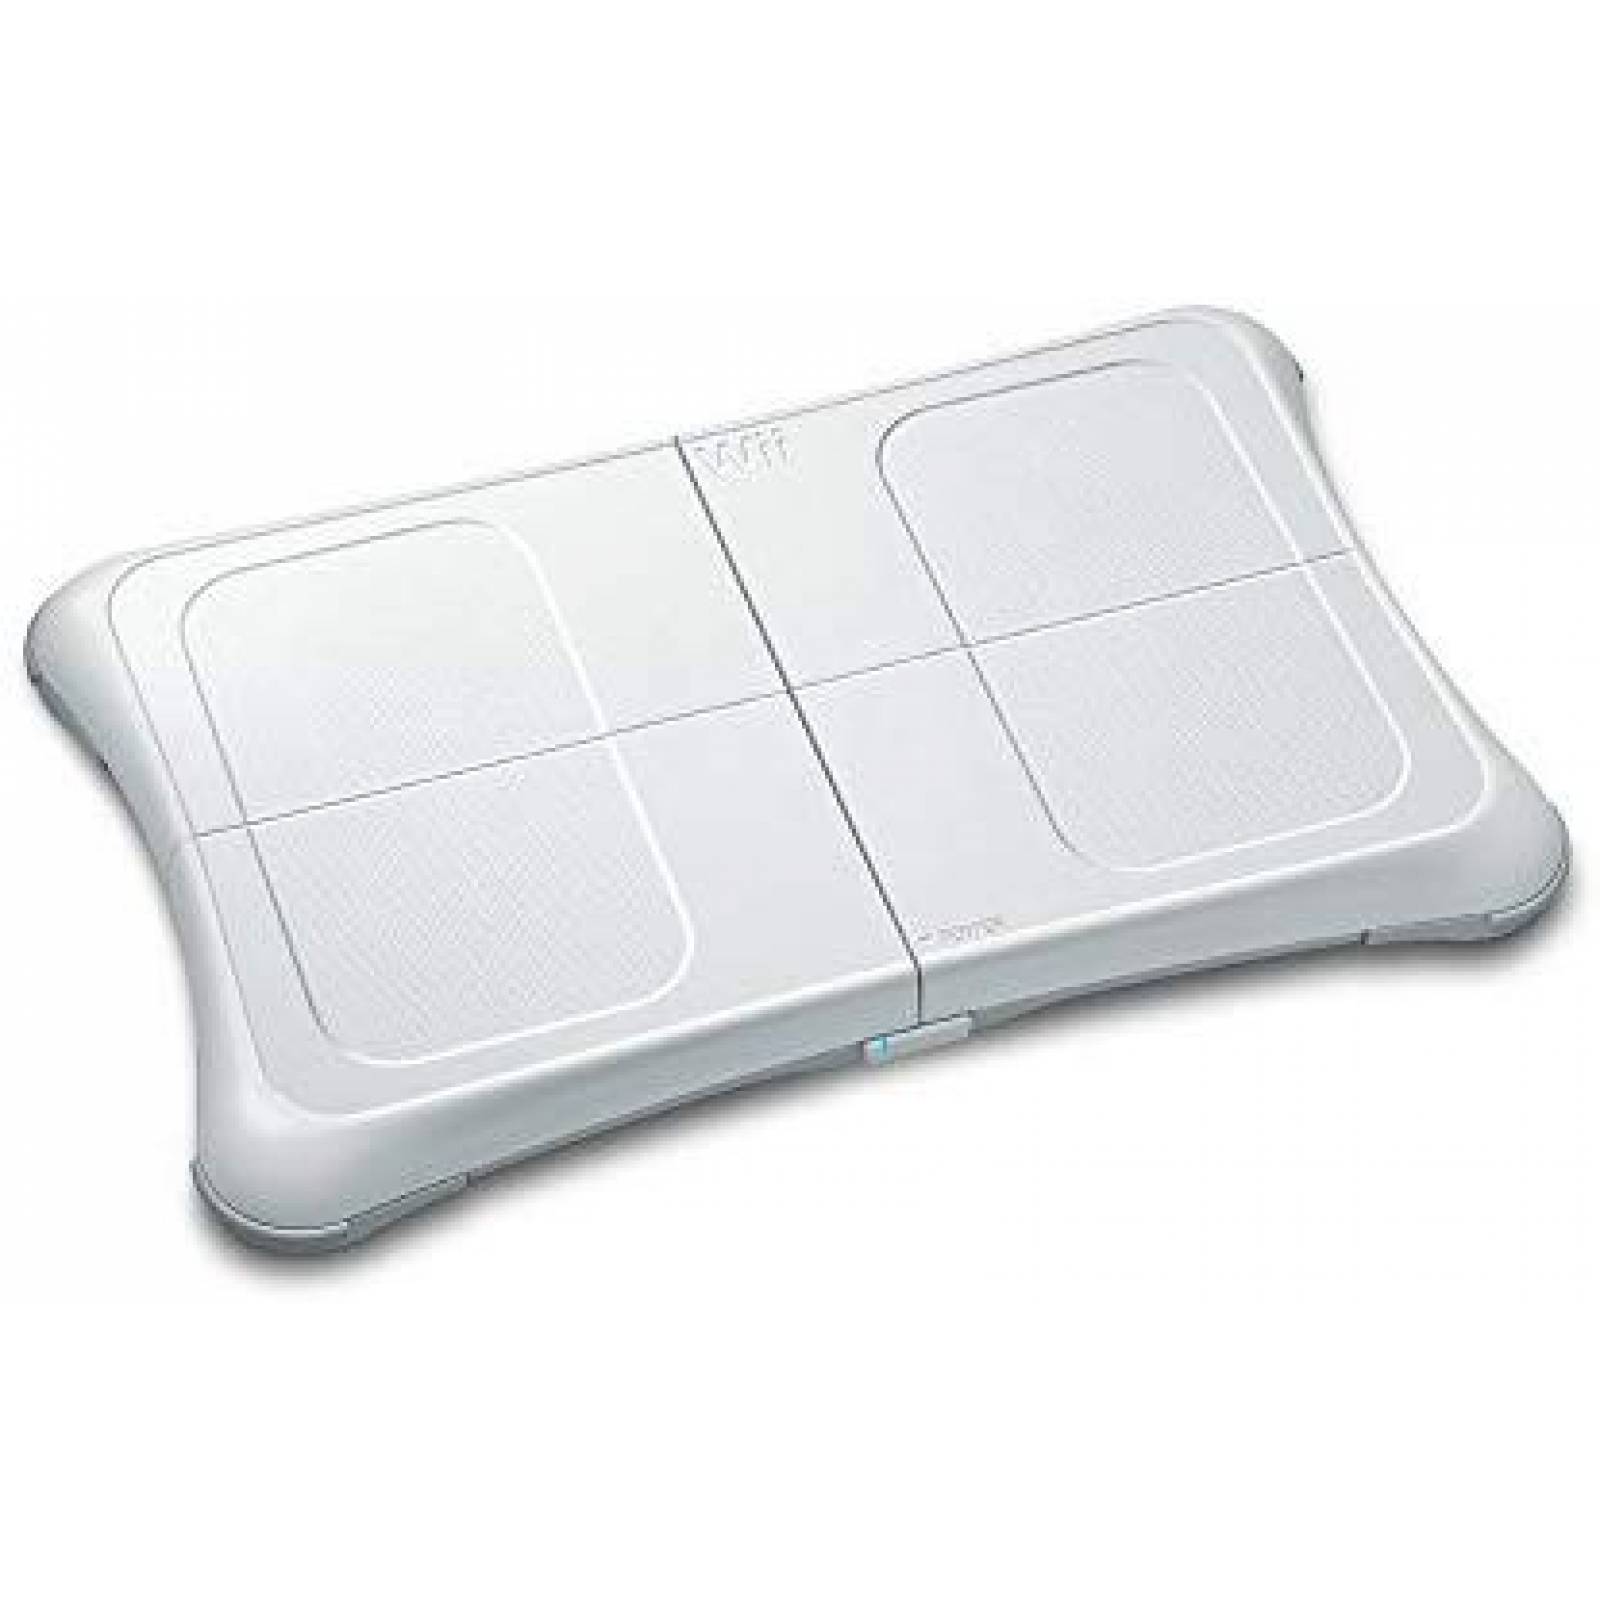 Balance Board Nintendo Wii 4 onzas -Blanco